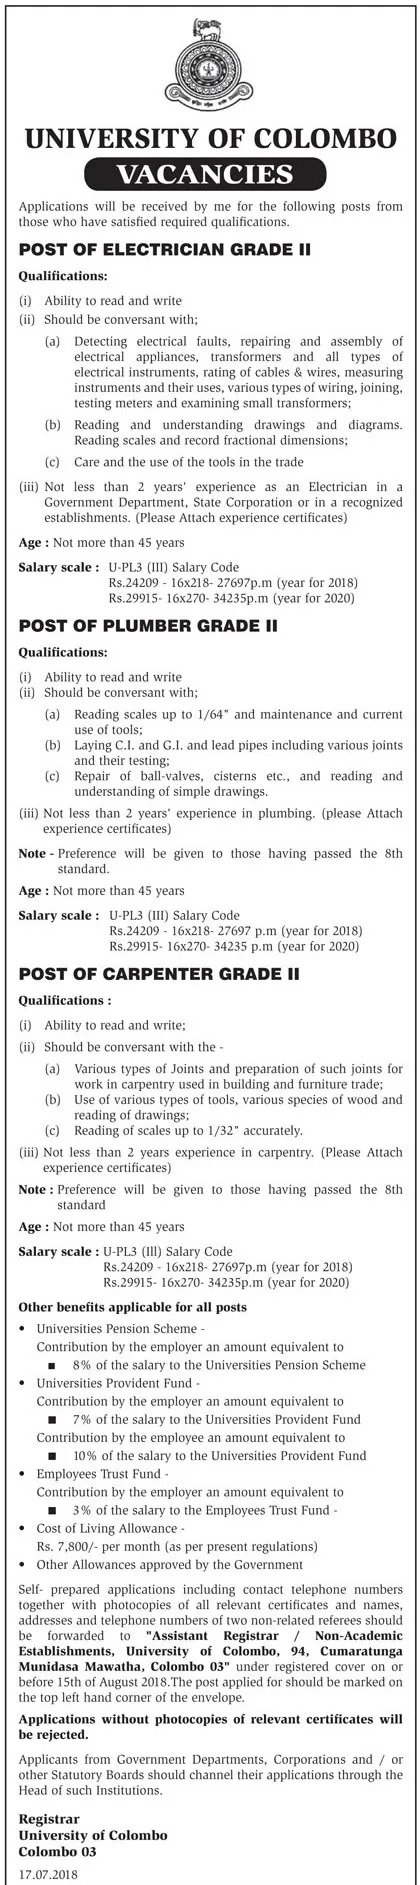 Electrician / Plumber / Carpenter - University of Colombo Jobs Vacancies